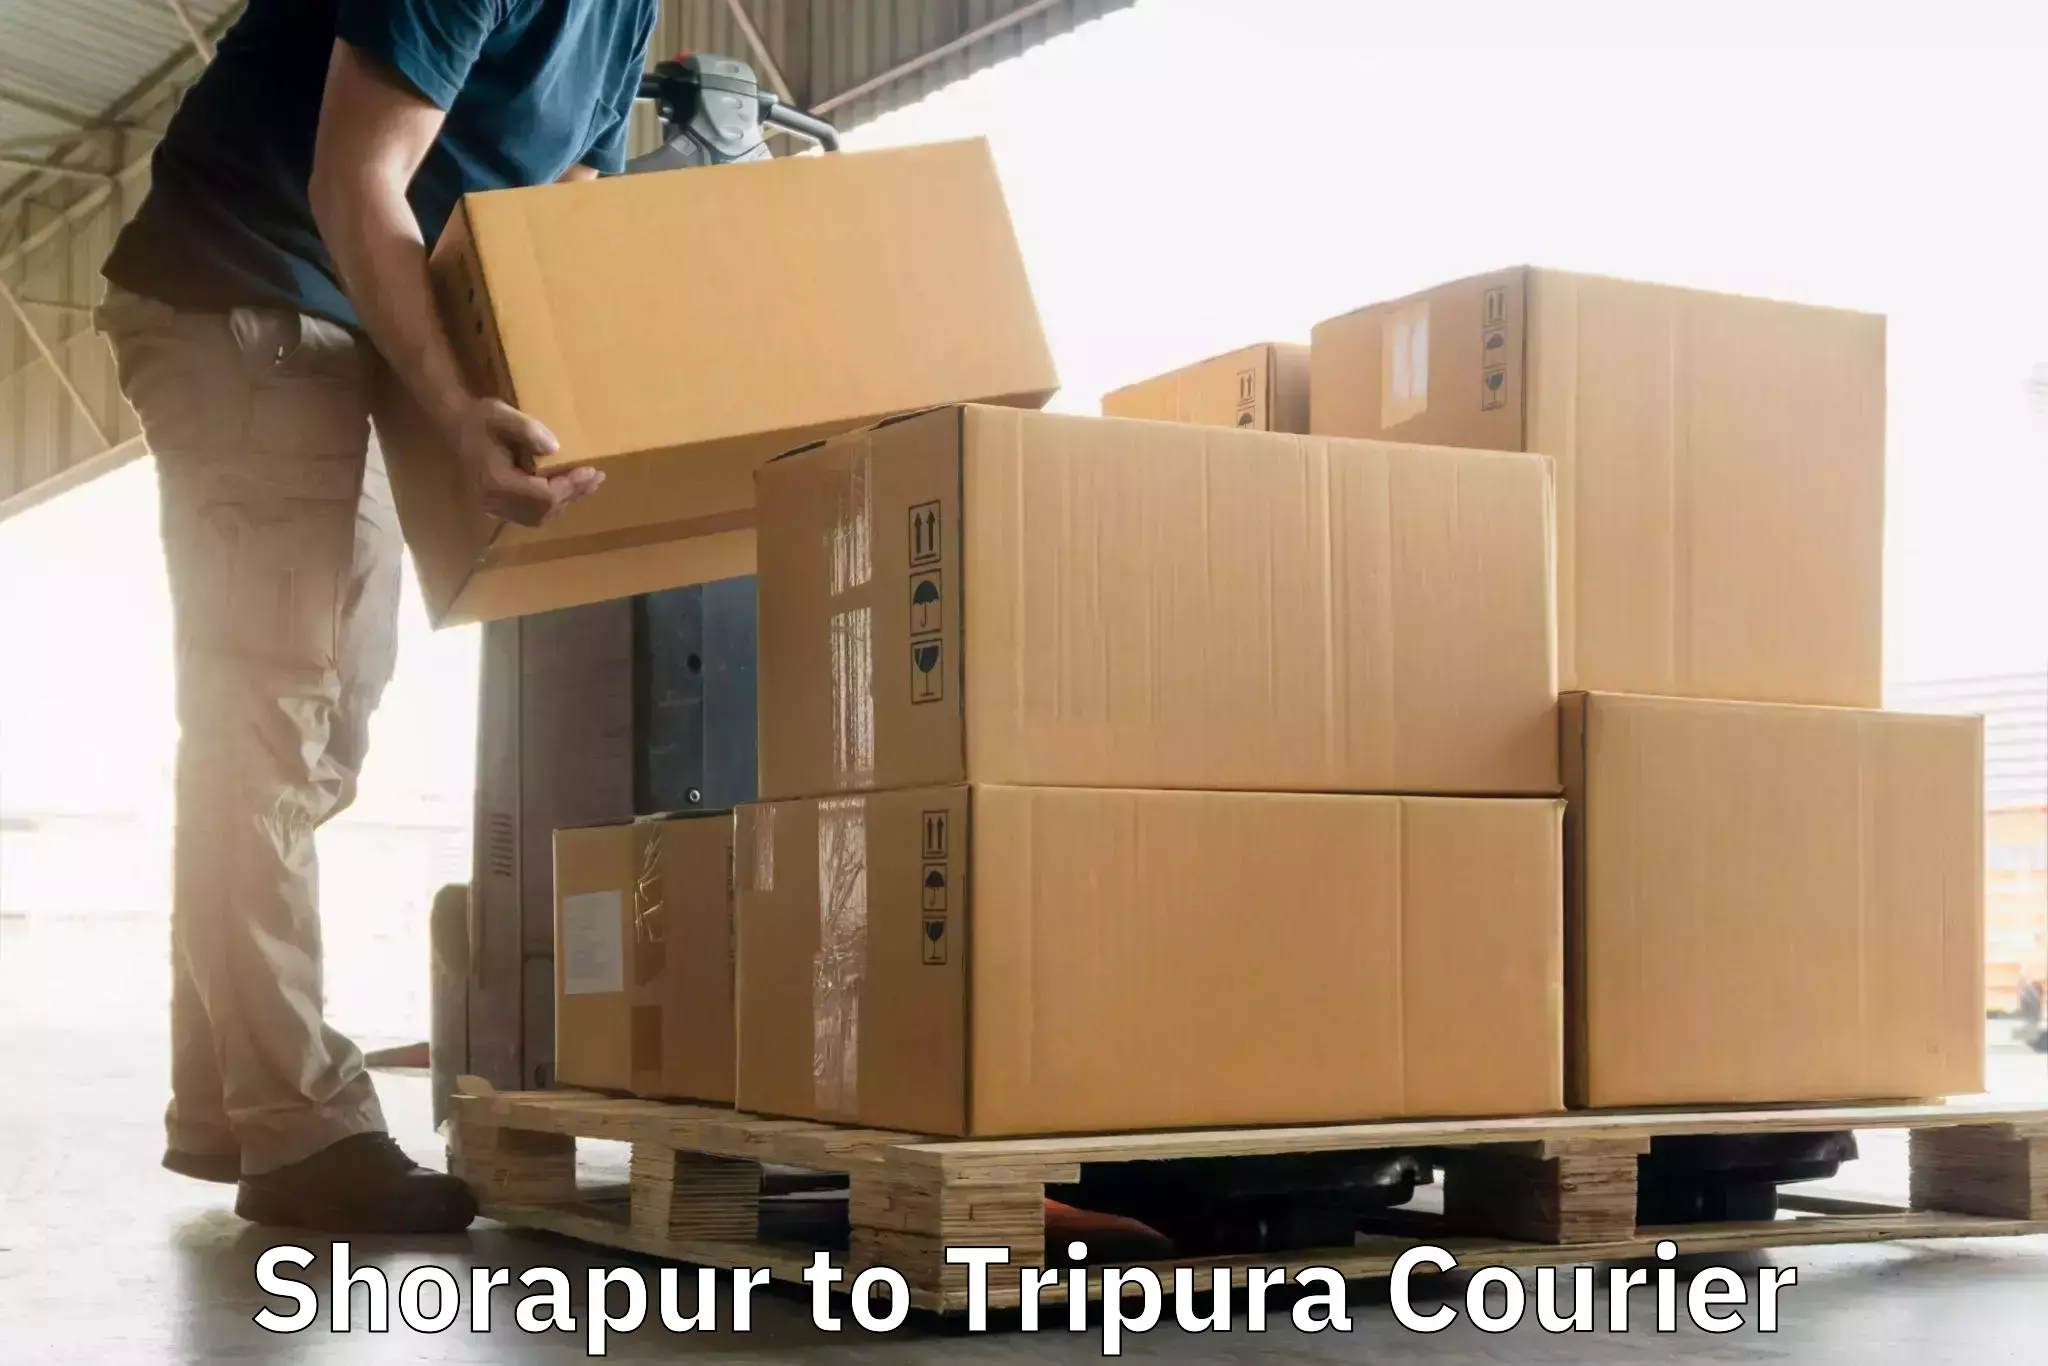 Modern courier technology Shorapur to Udaipur Tripura